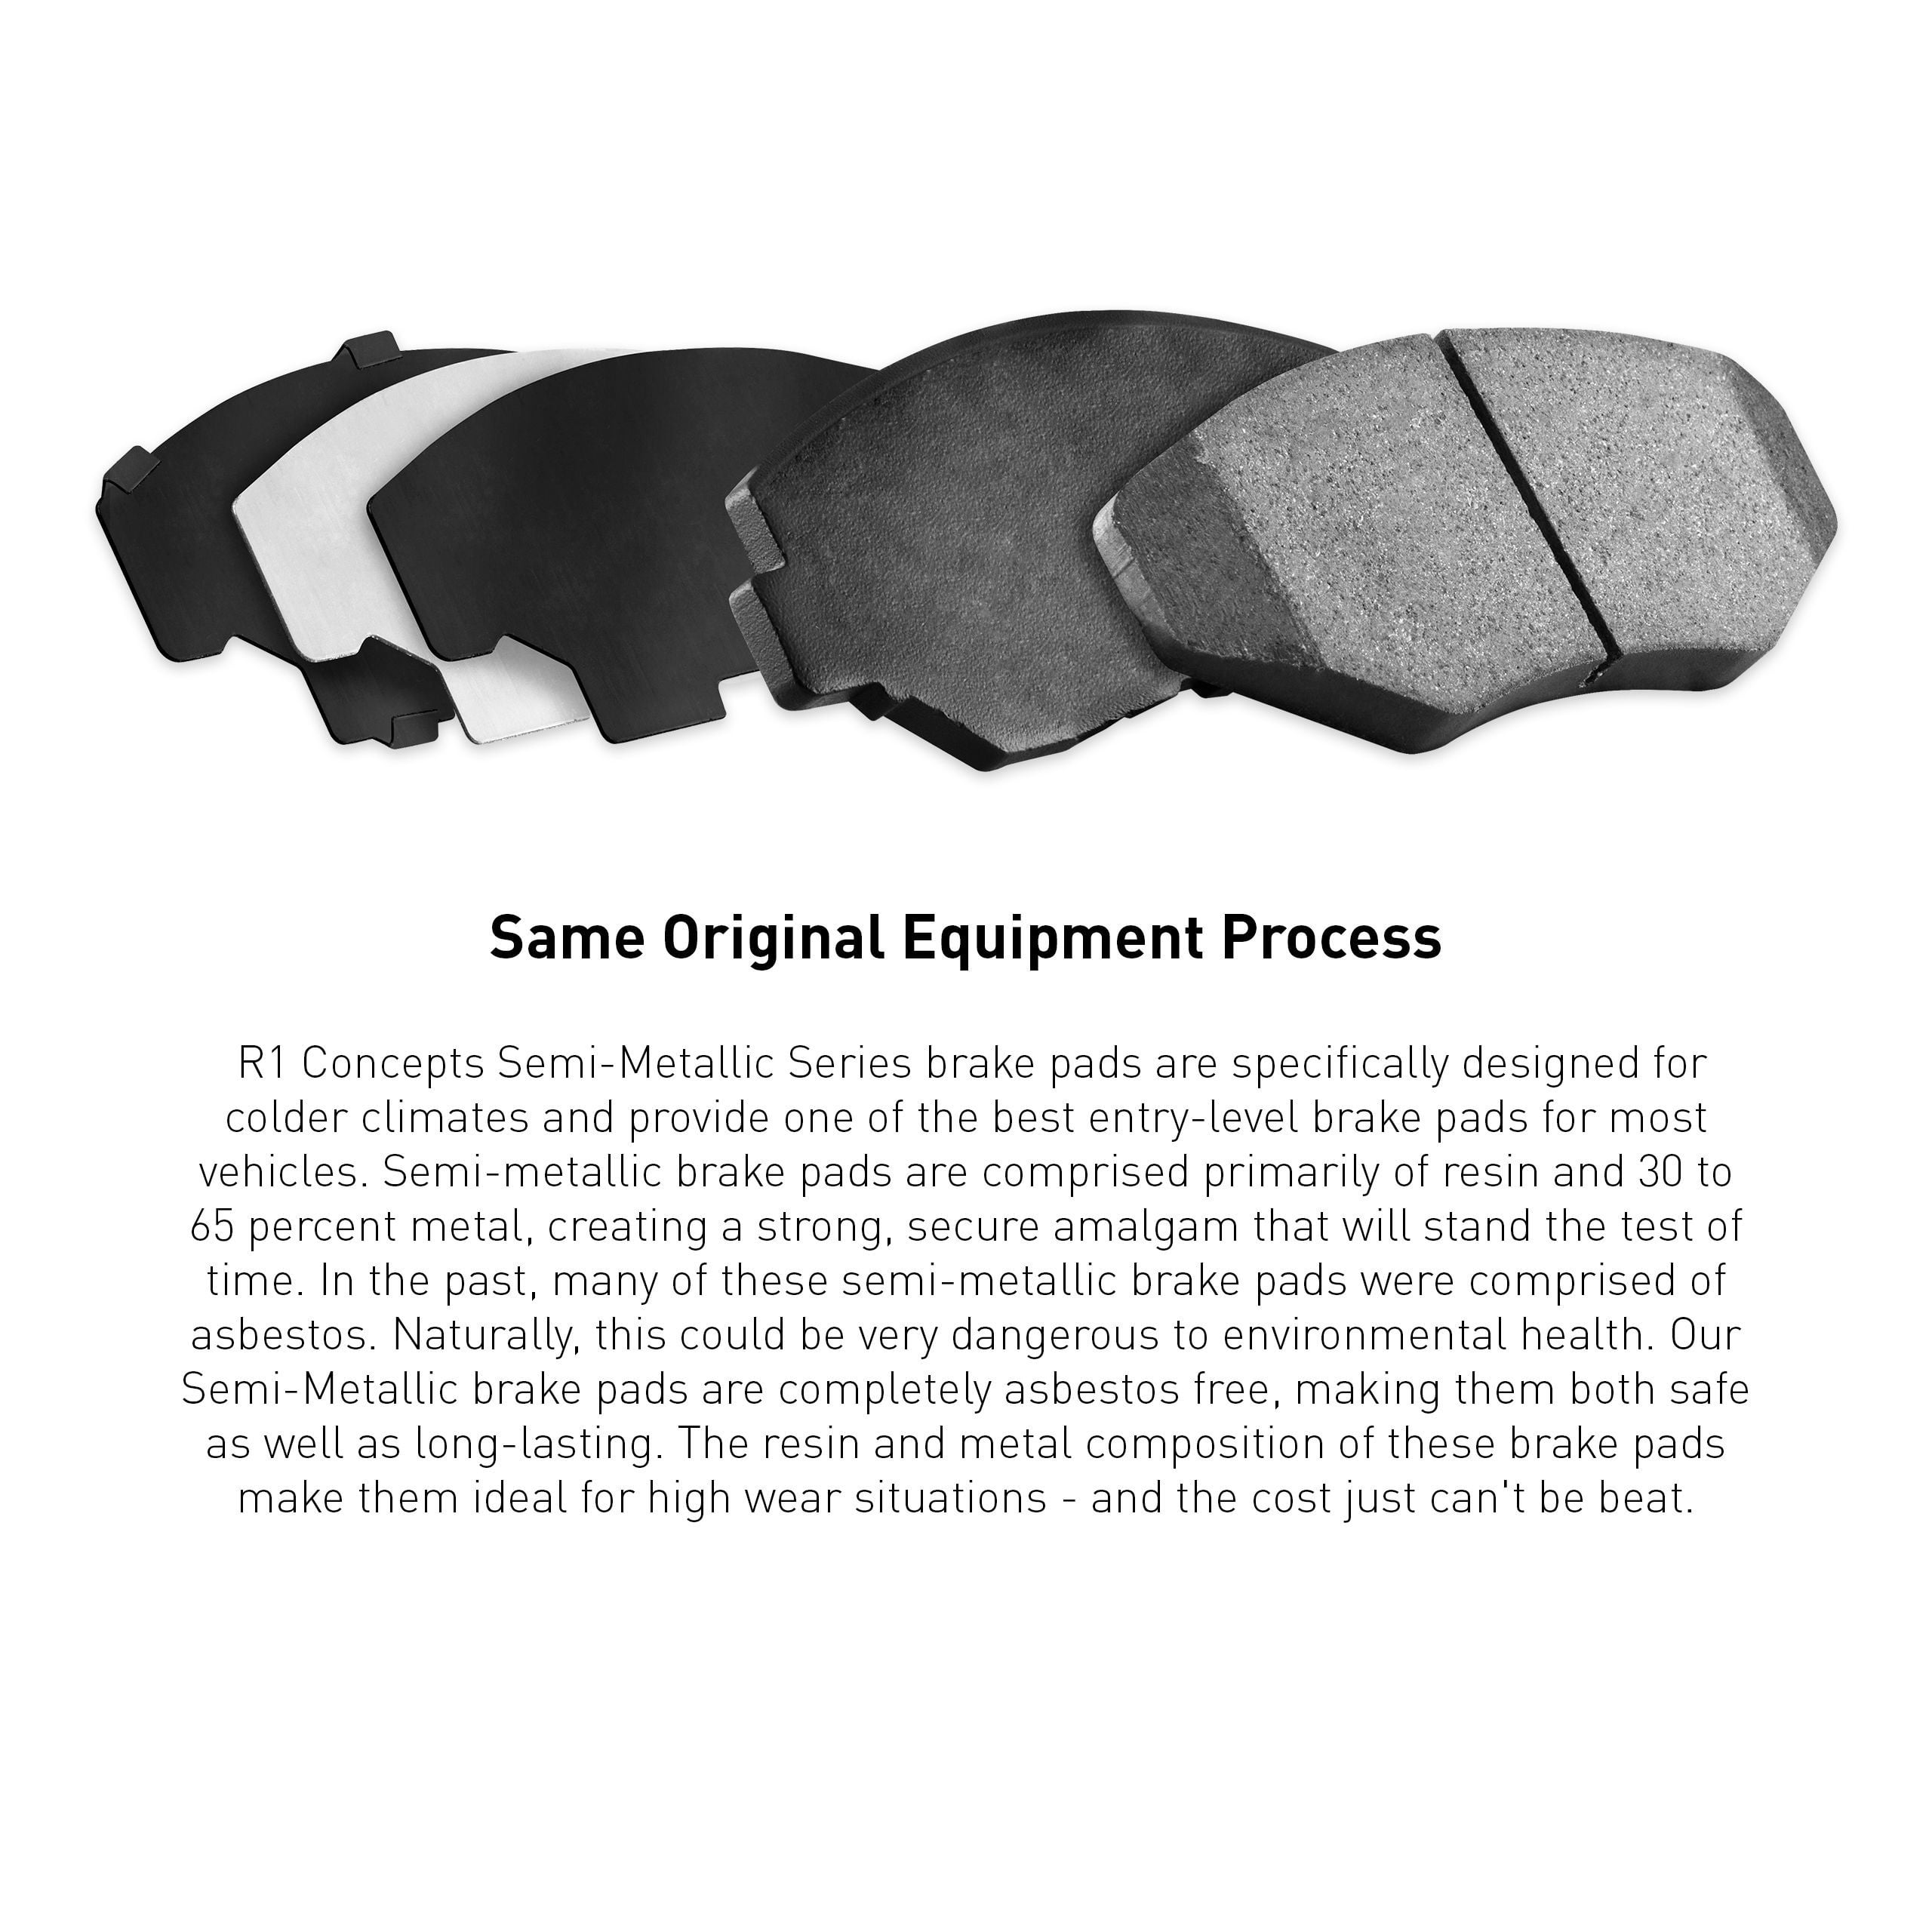 Front R1 concepts Semi-Metallic Series Brake Pads 2311-0180-00 